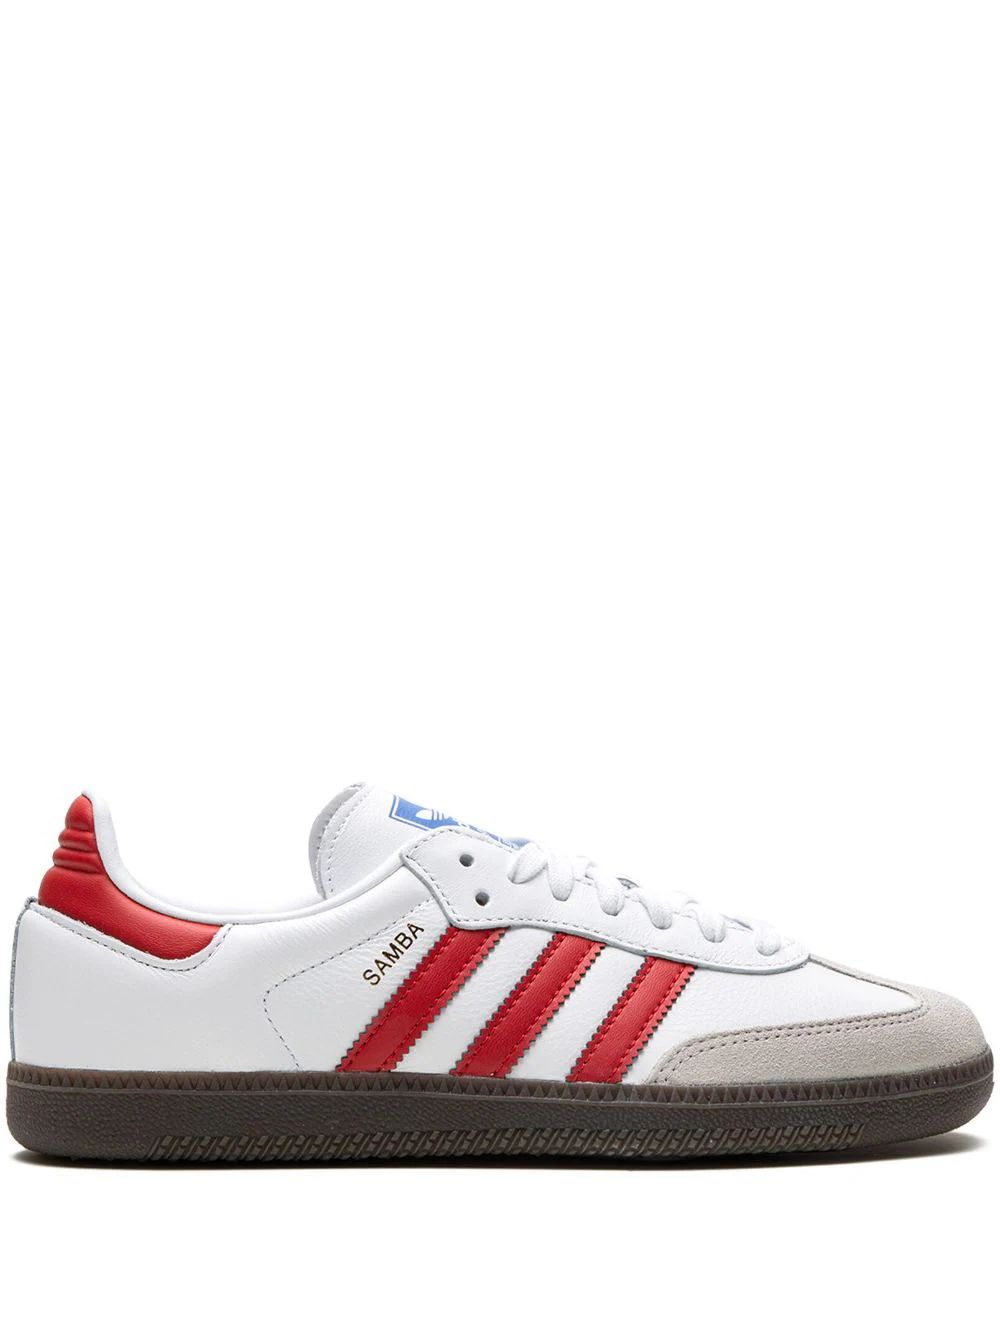 Adidas Samba OG "White/Red" Sneakers - Farfetch | Farfetch Global